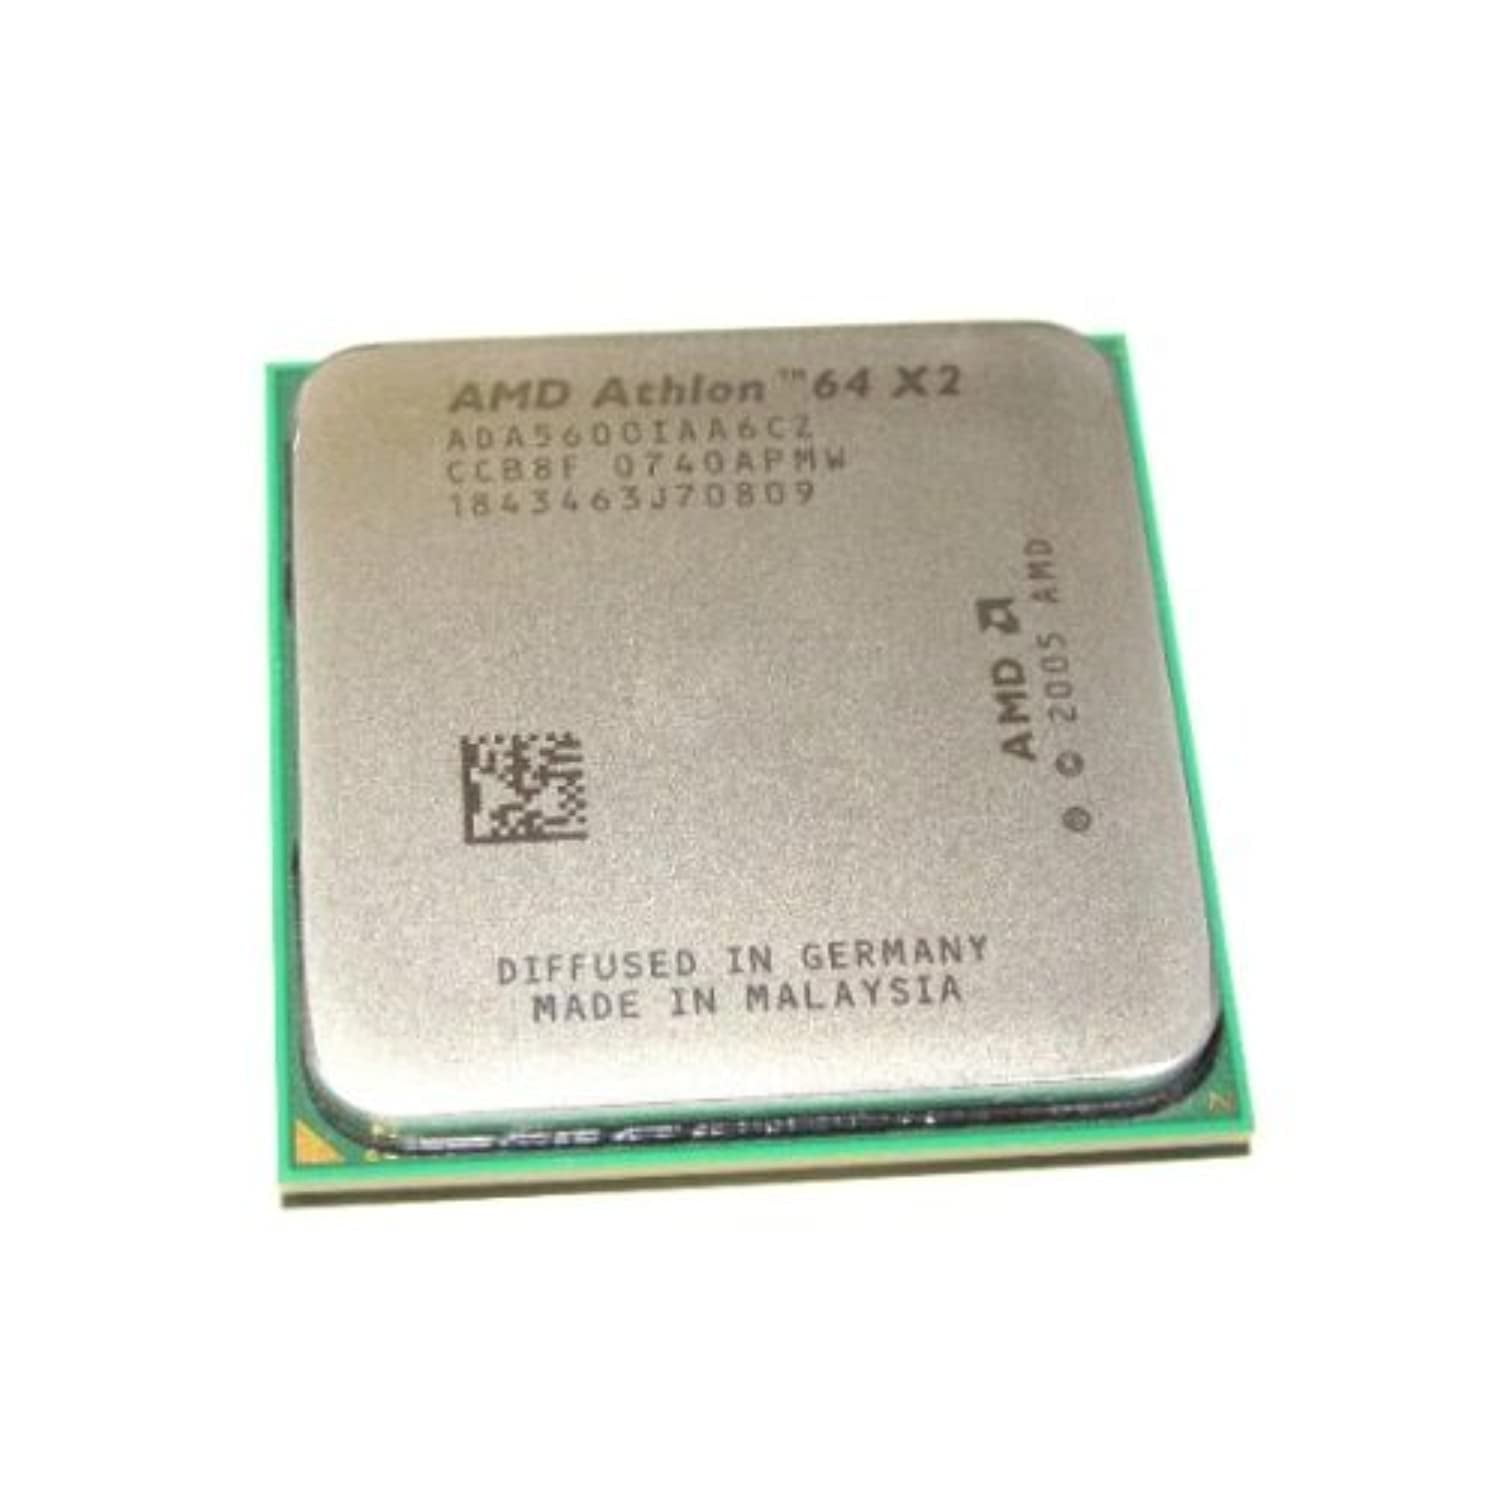 AMD Athlon 64 x2 ada5600iaa6cz. AMD Athlon 64 x2 5000+. AMD Athlon 64 2001 процессор. AMD Athlon 64 x2 корпус. Athlon 650